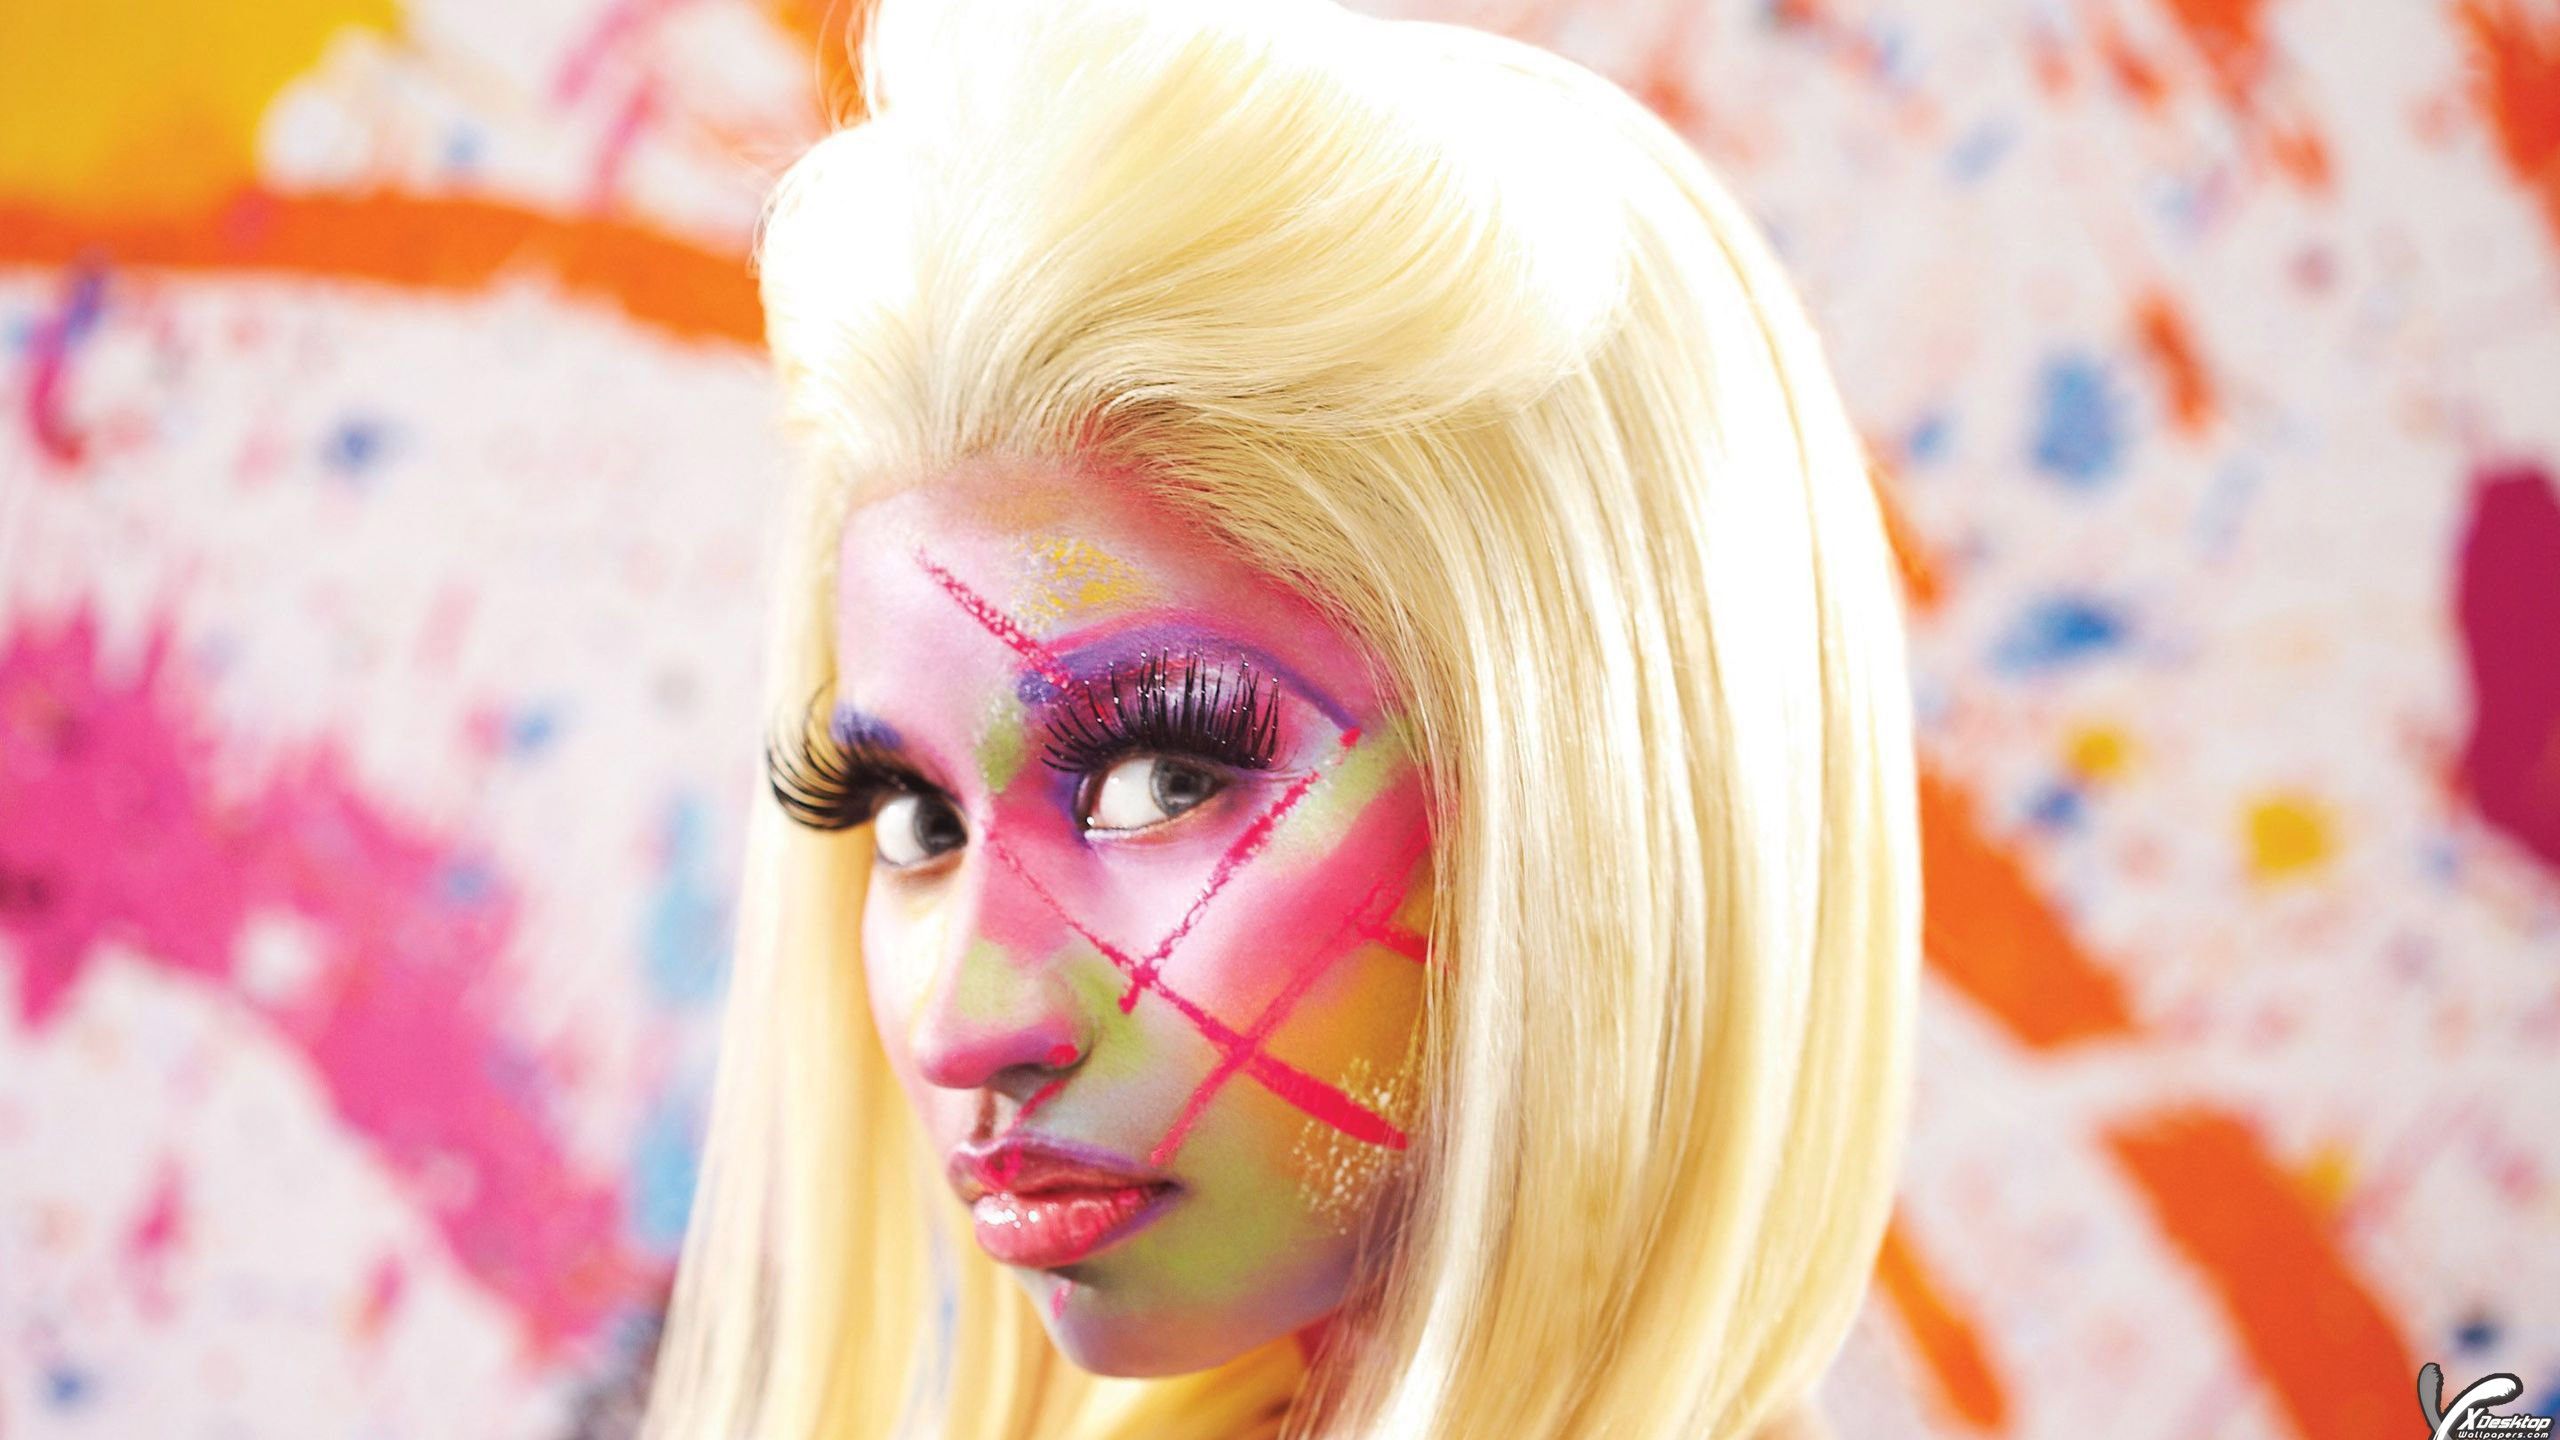 Nicki Minaj Wallpaper, Photo & Image .xdesktopwallpaper.com